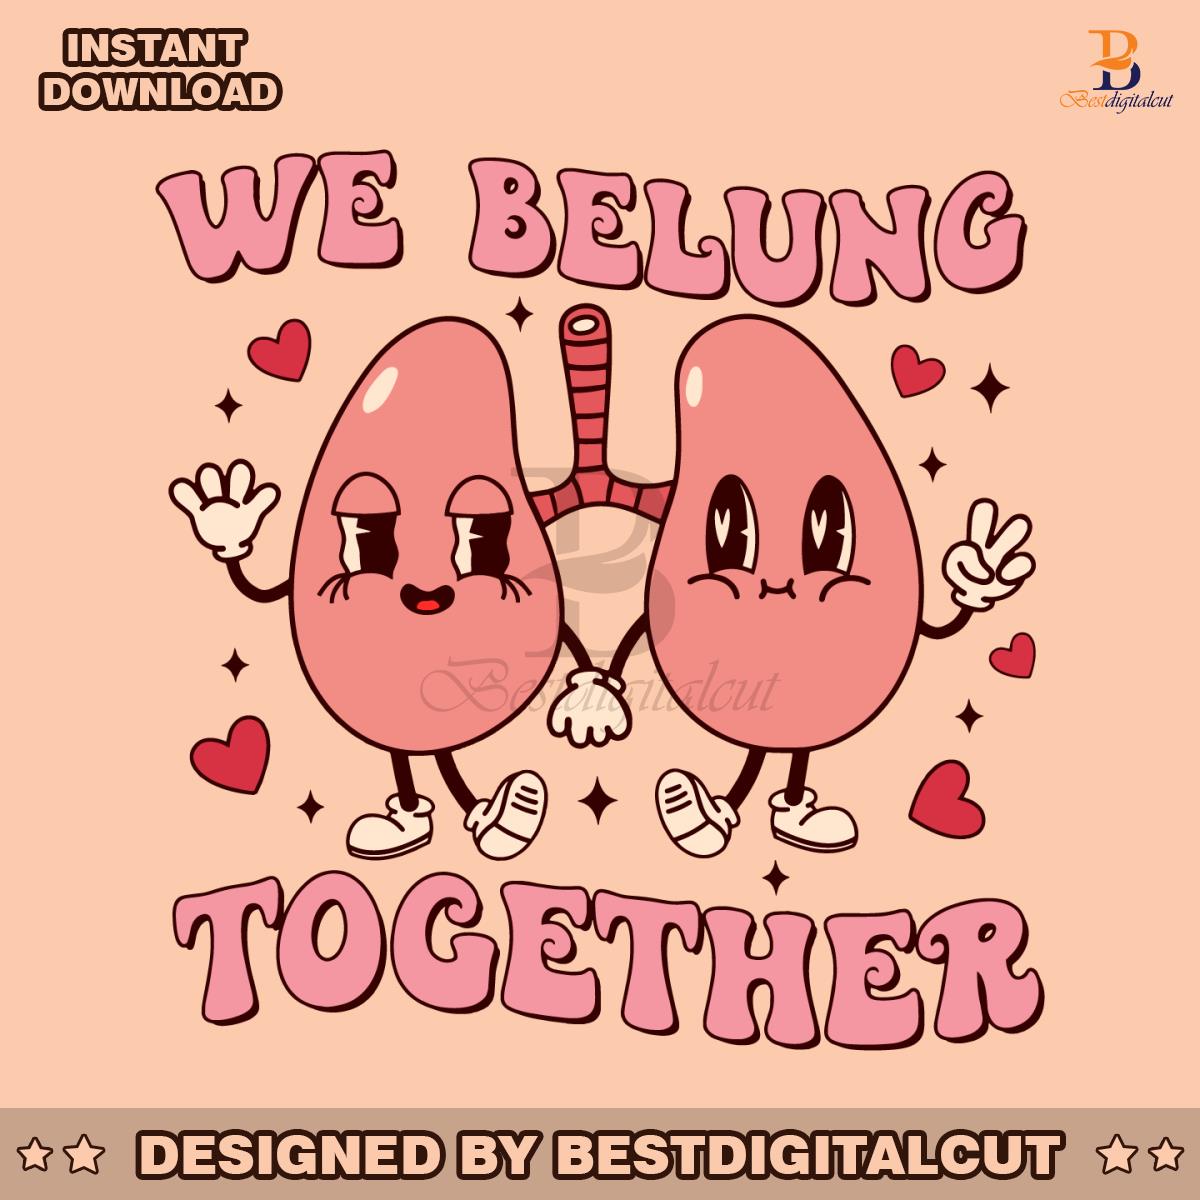 we-belung-together-therapist-valentine-svg